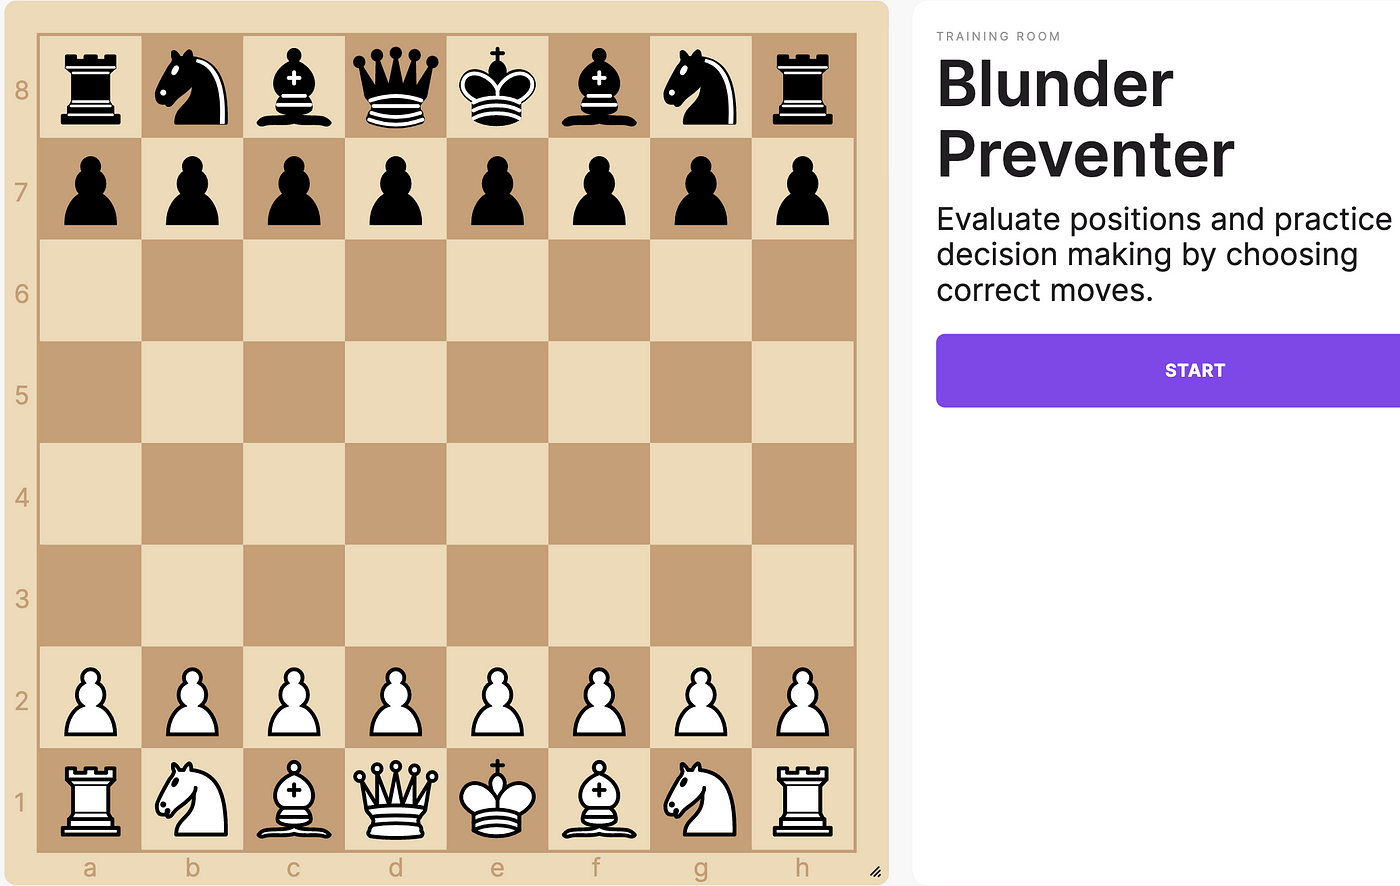 Chess Improvement: Aimchess Blunder Preventer